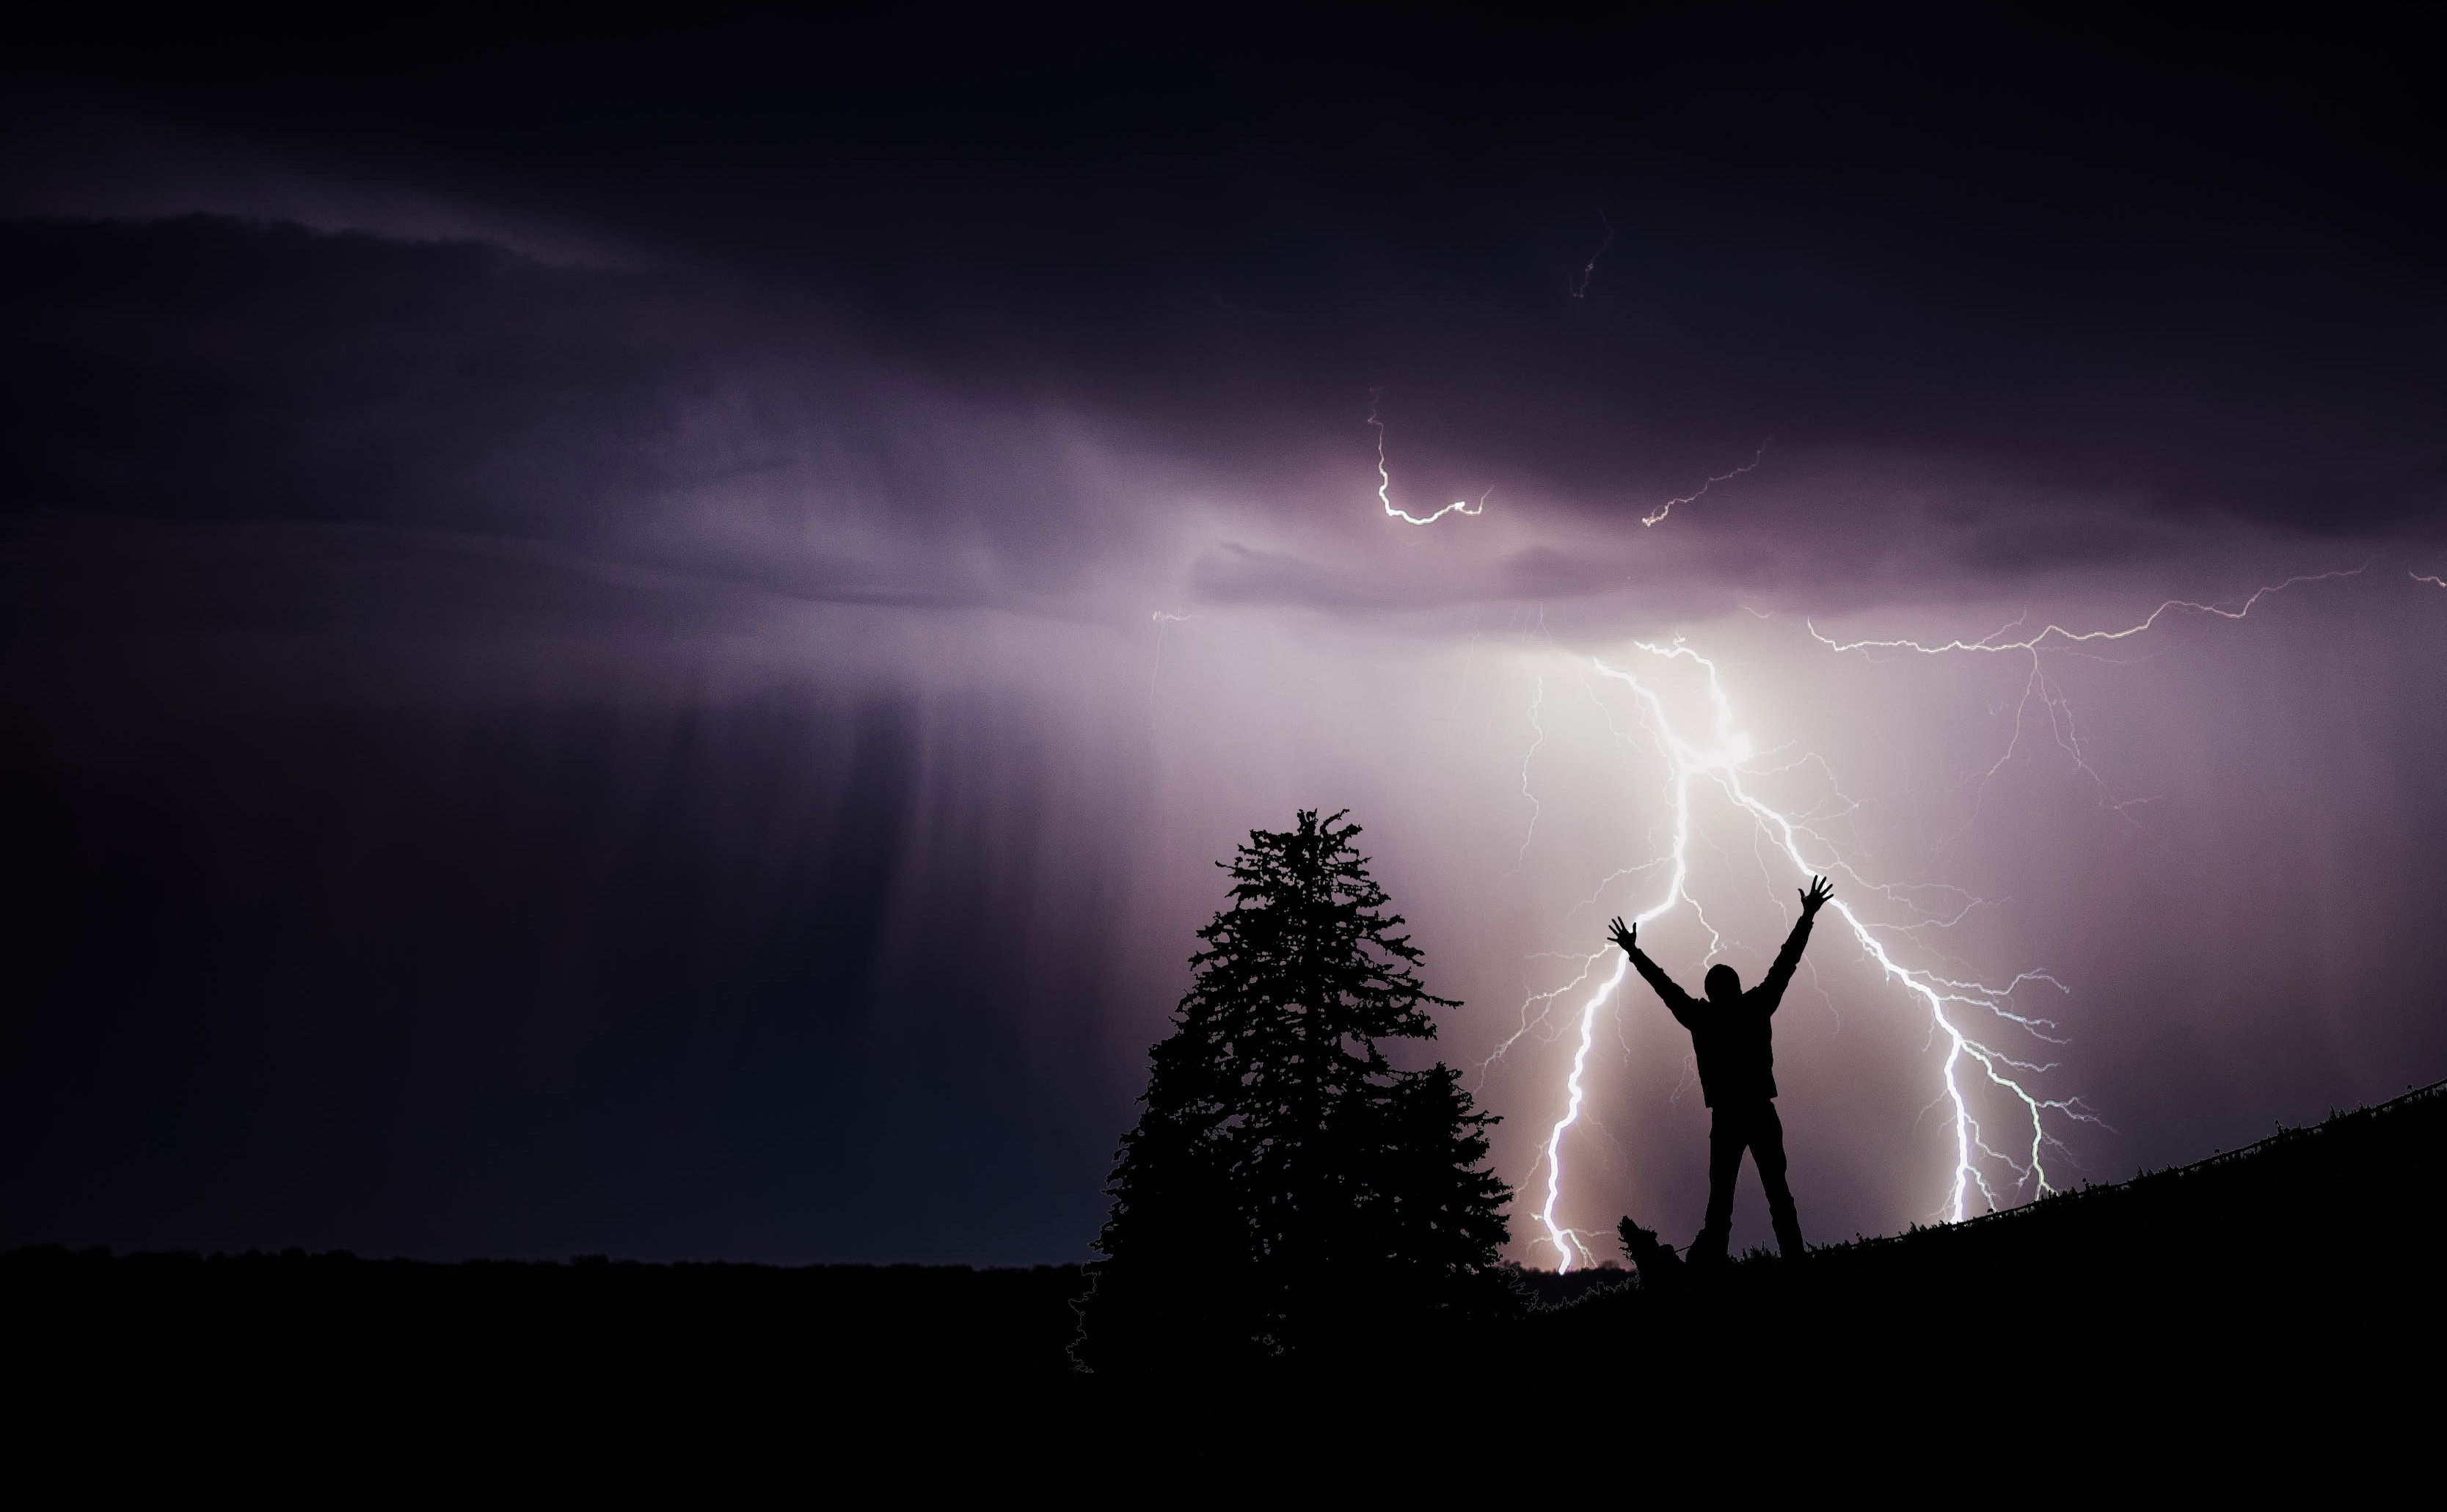 3335x2061 Free Images : flash, lightening bolt, thunder, thunderstorm, thunderbolt, storm, rain, terminator, sky, light, dark, shadow, night, colours, black, pink, purple, violet, silhouette, figure, man, human, arms, hands, body, tree, furtree, energy